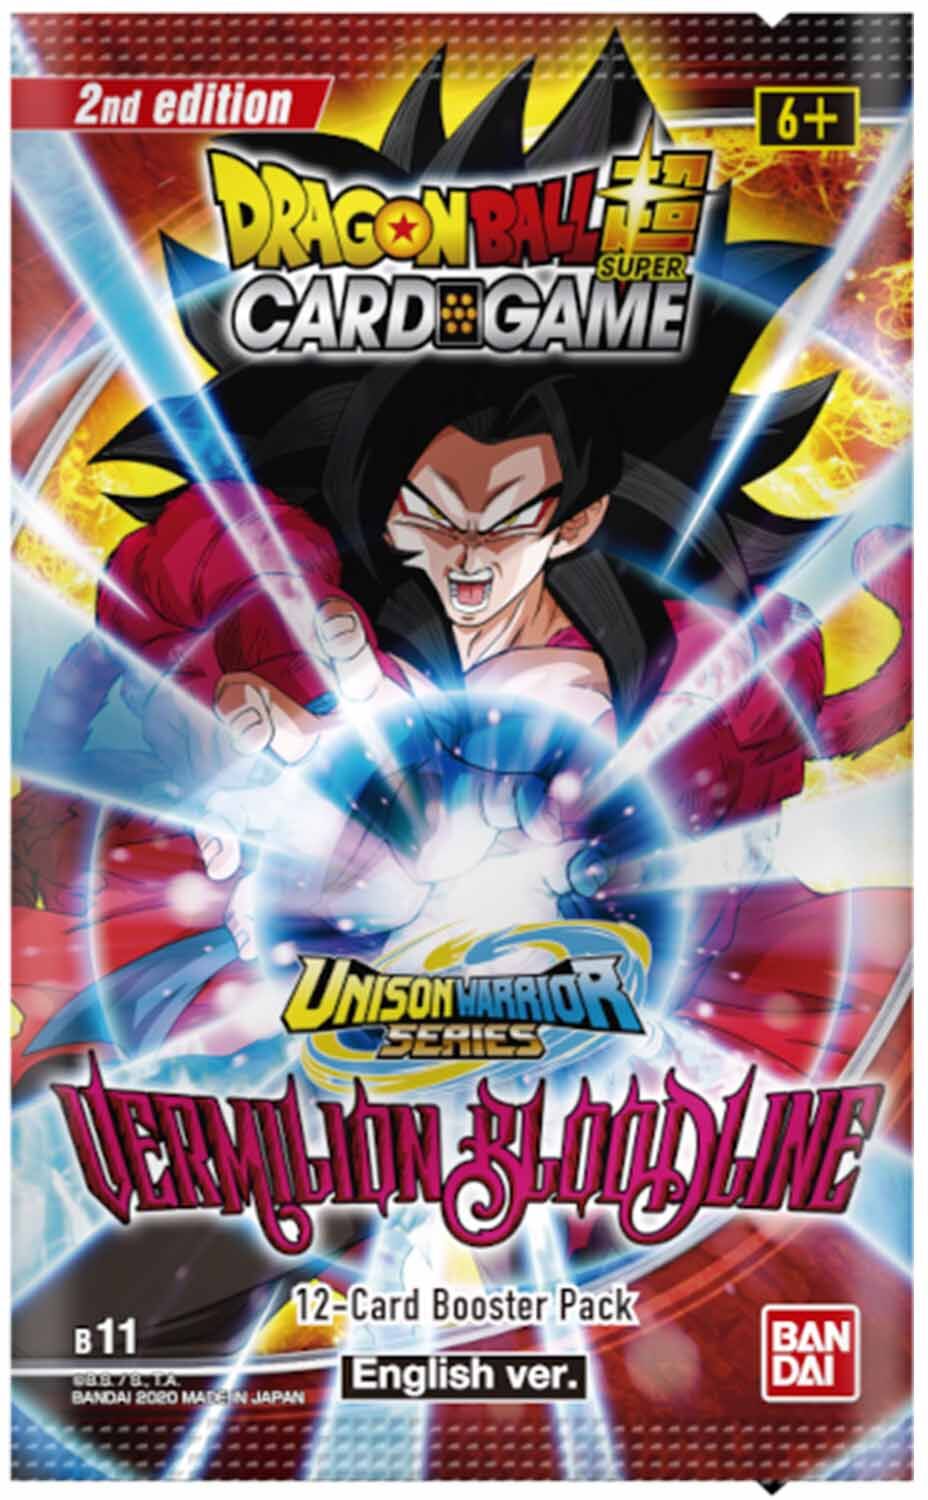 Vermilion Bloodline B11 Booster - Dragon Ball Super Card Game - EN